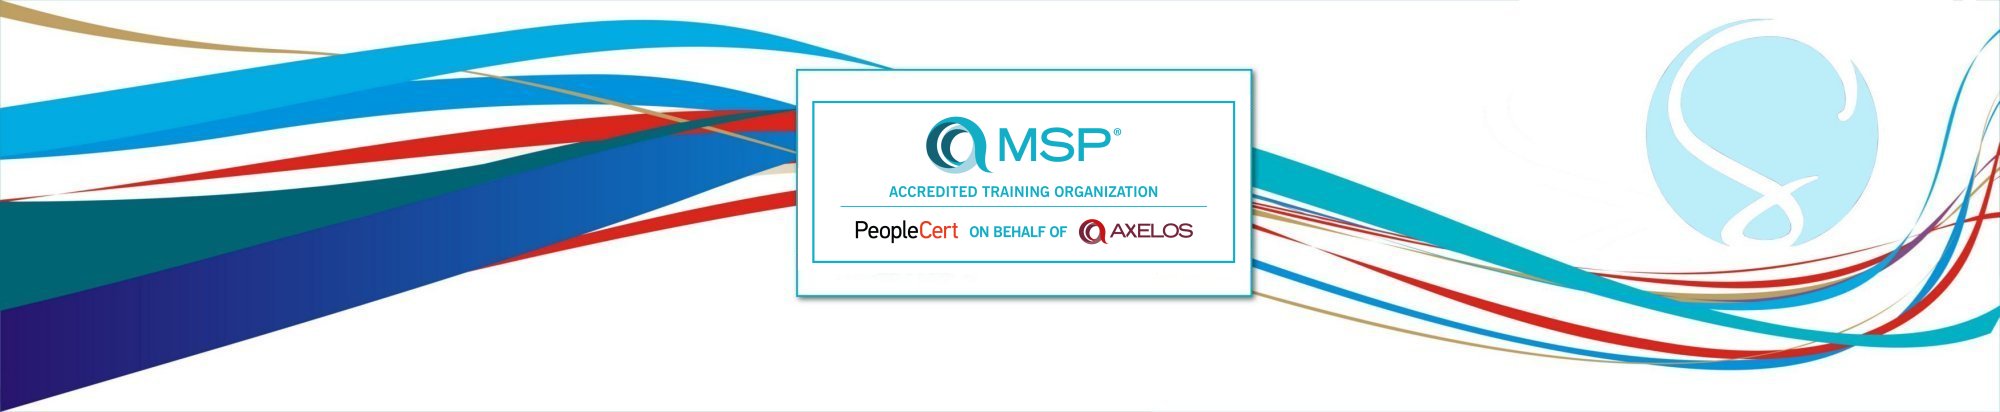 MSP Training & Certification